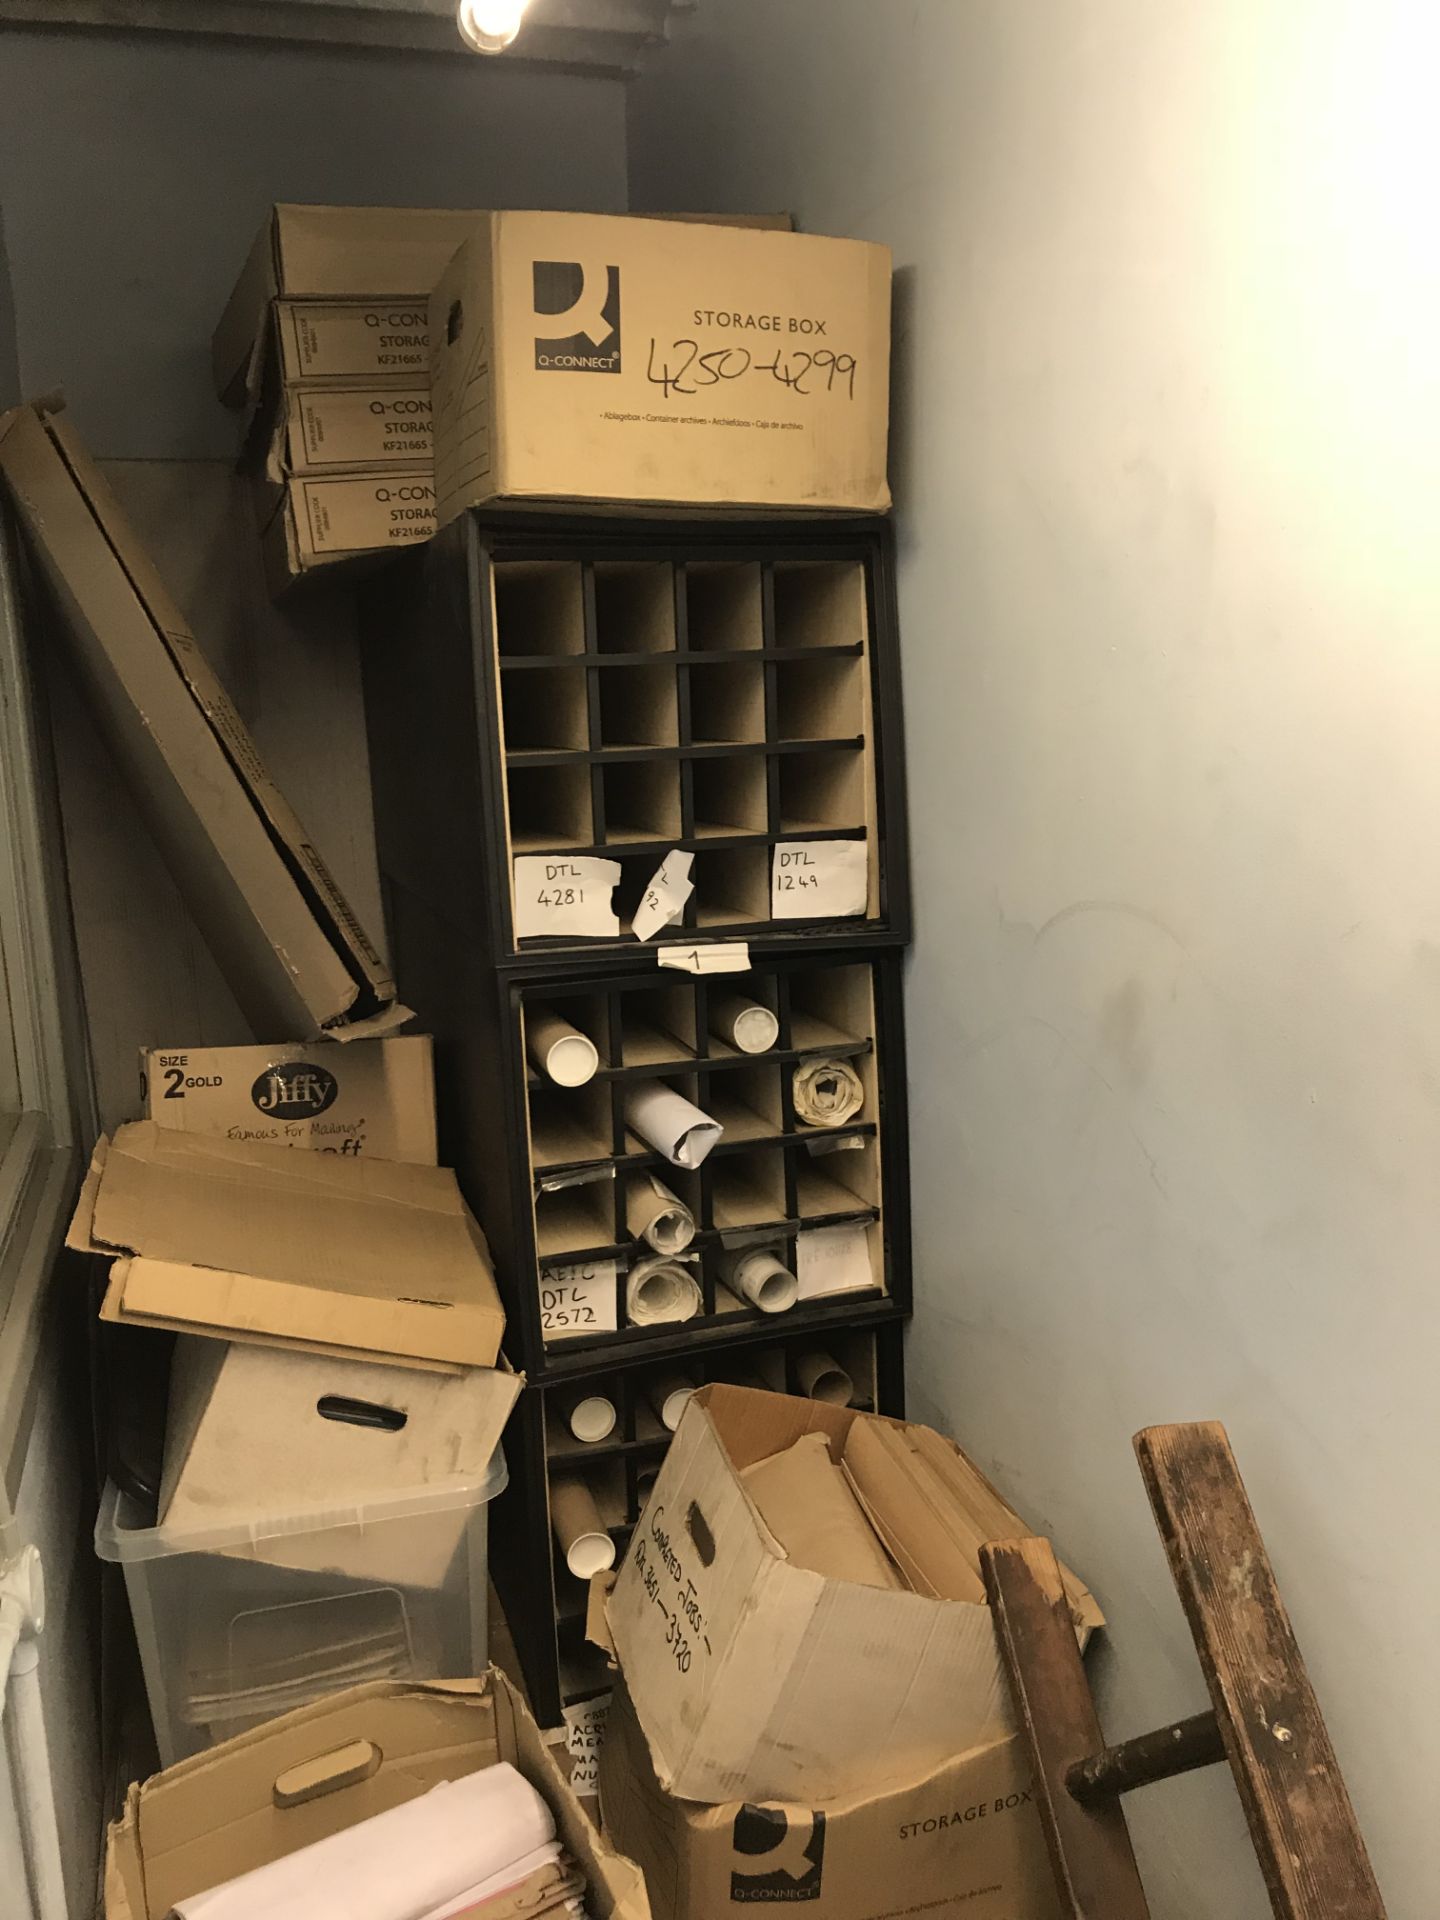 3 x Document Storage Boxes